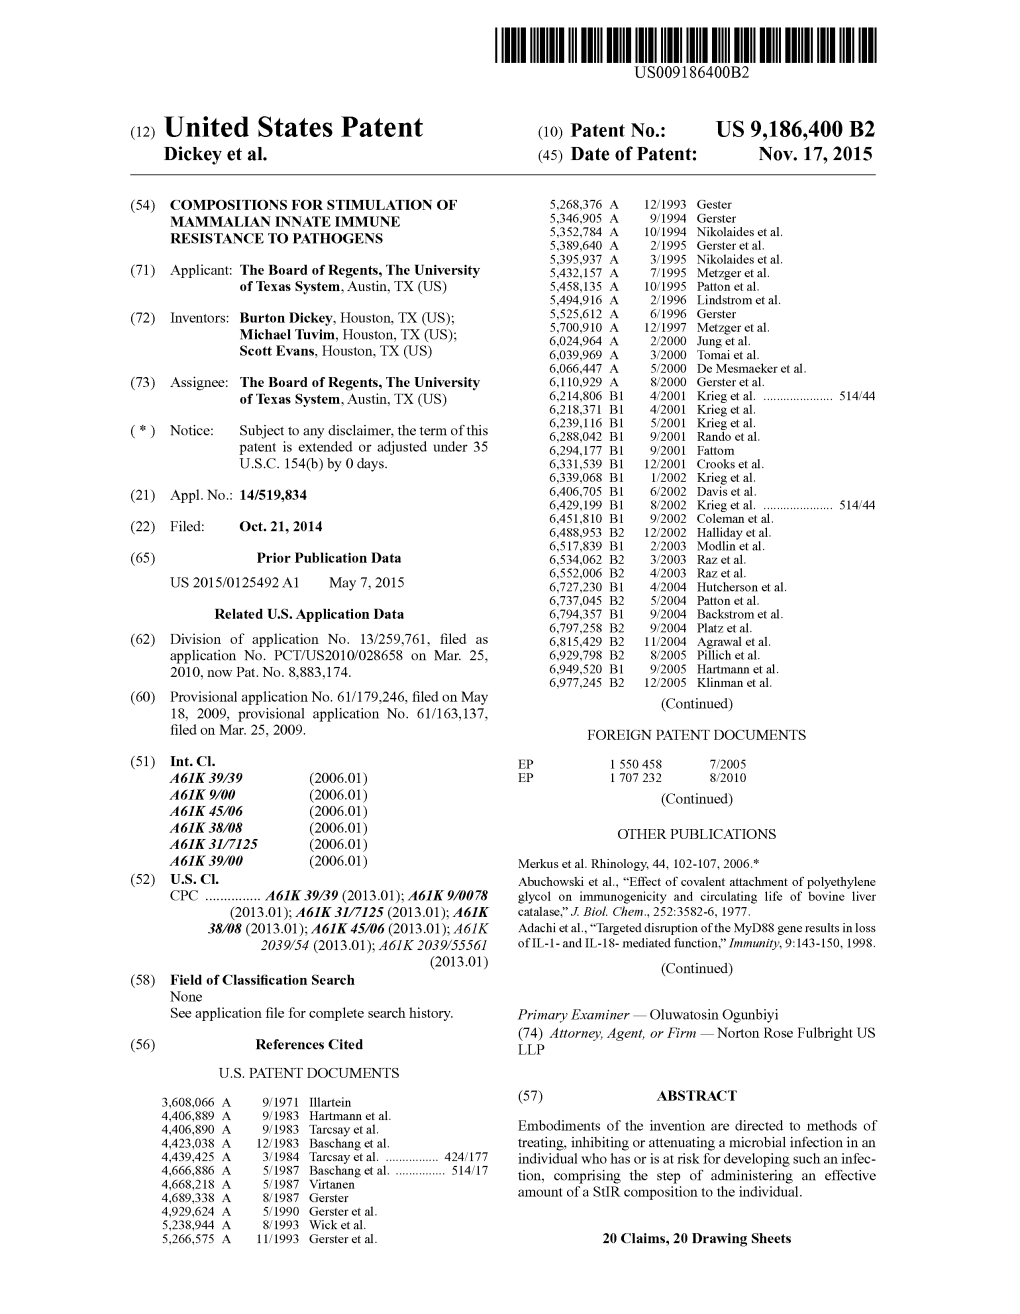 (10) Patent No.: US 9186400 B2